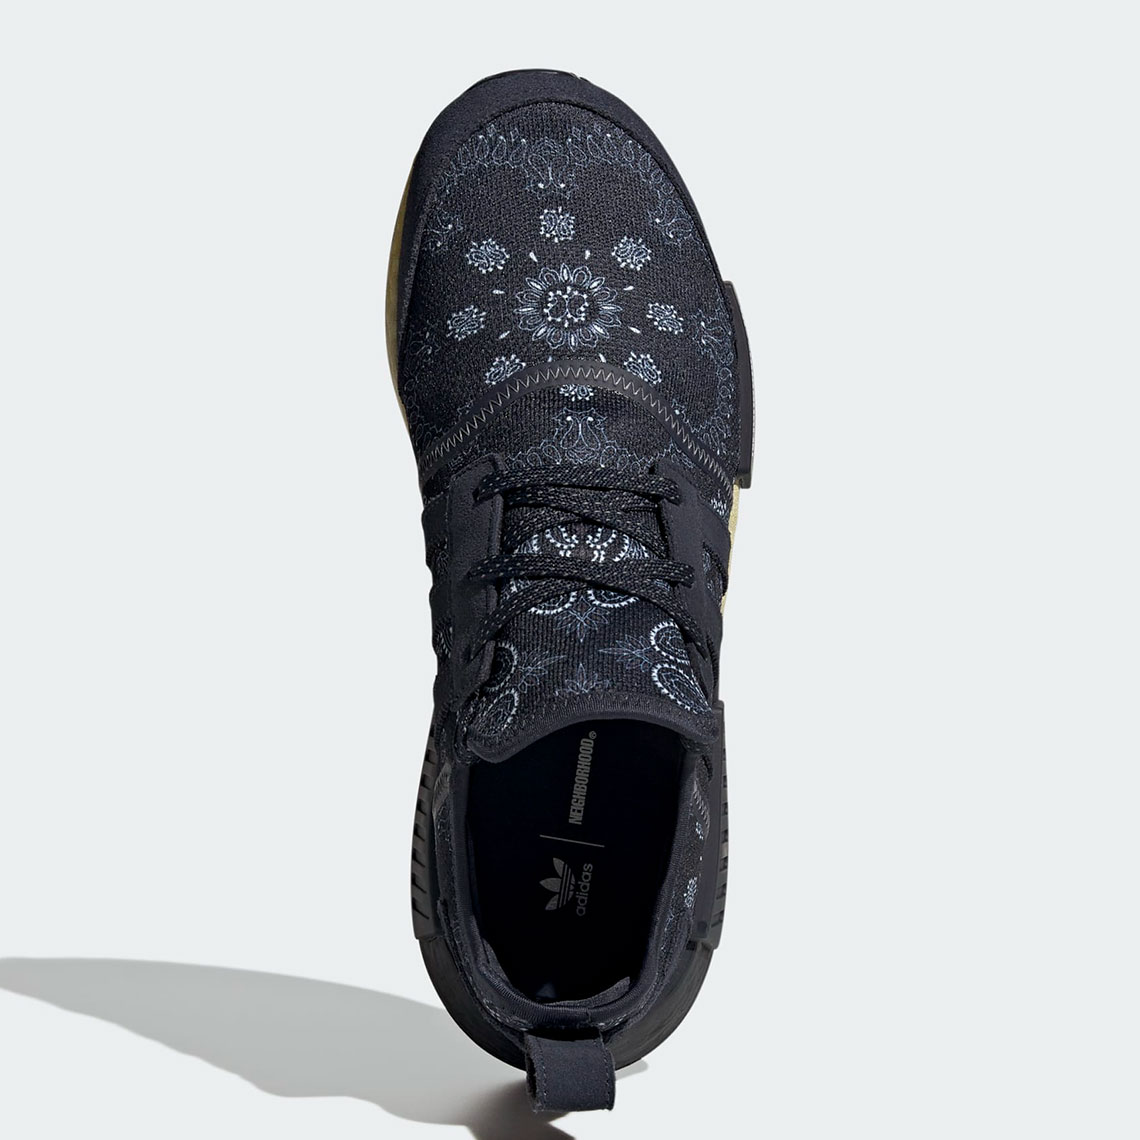 Skalk garrapata Respecto a NEIGHBORHOOD x adidas NMD R1 "Black"/"Navy" | SneakerNews.com